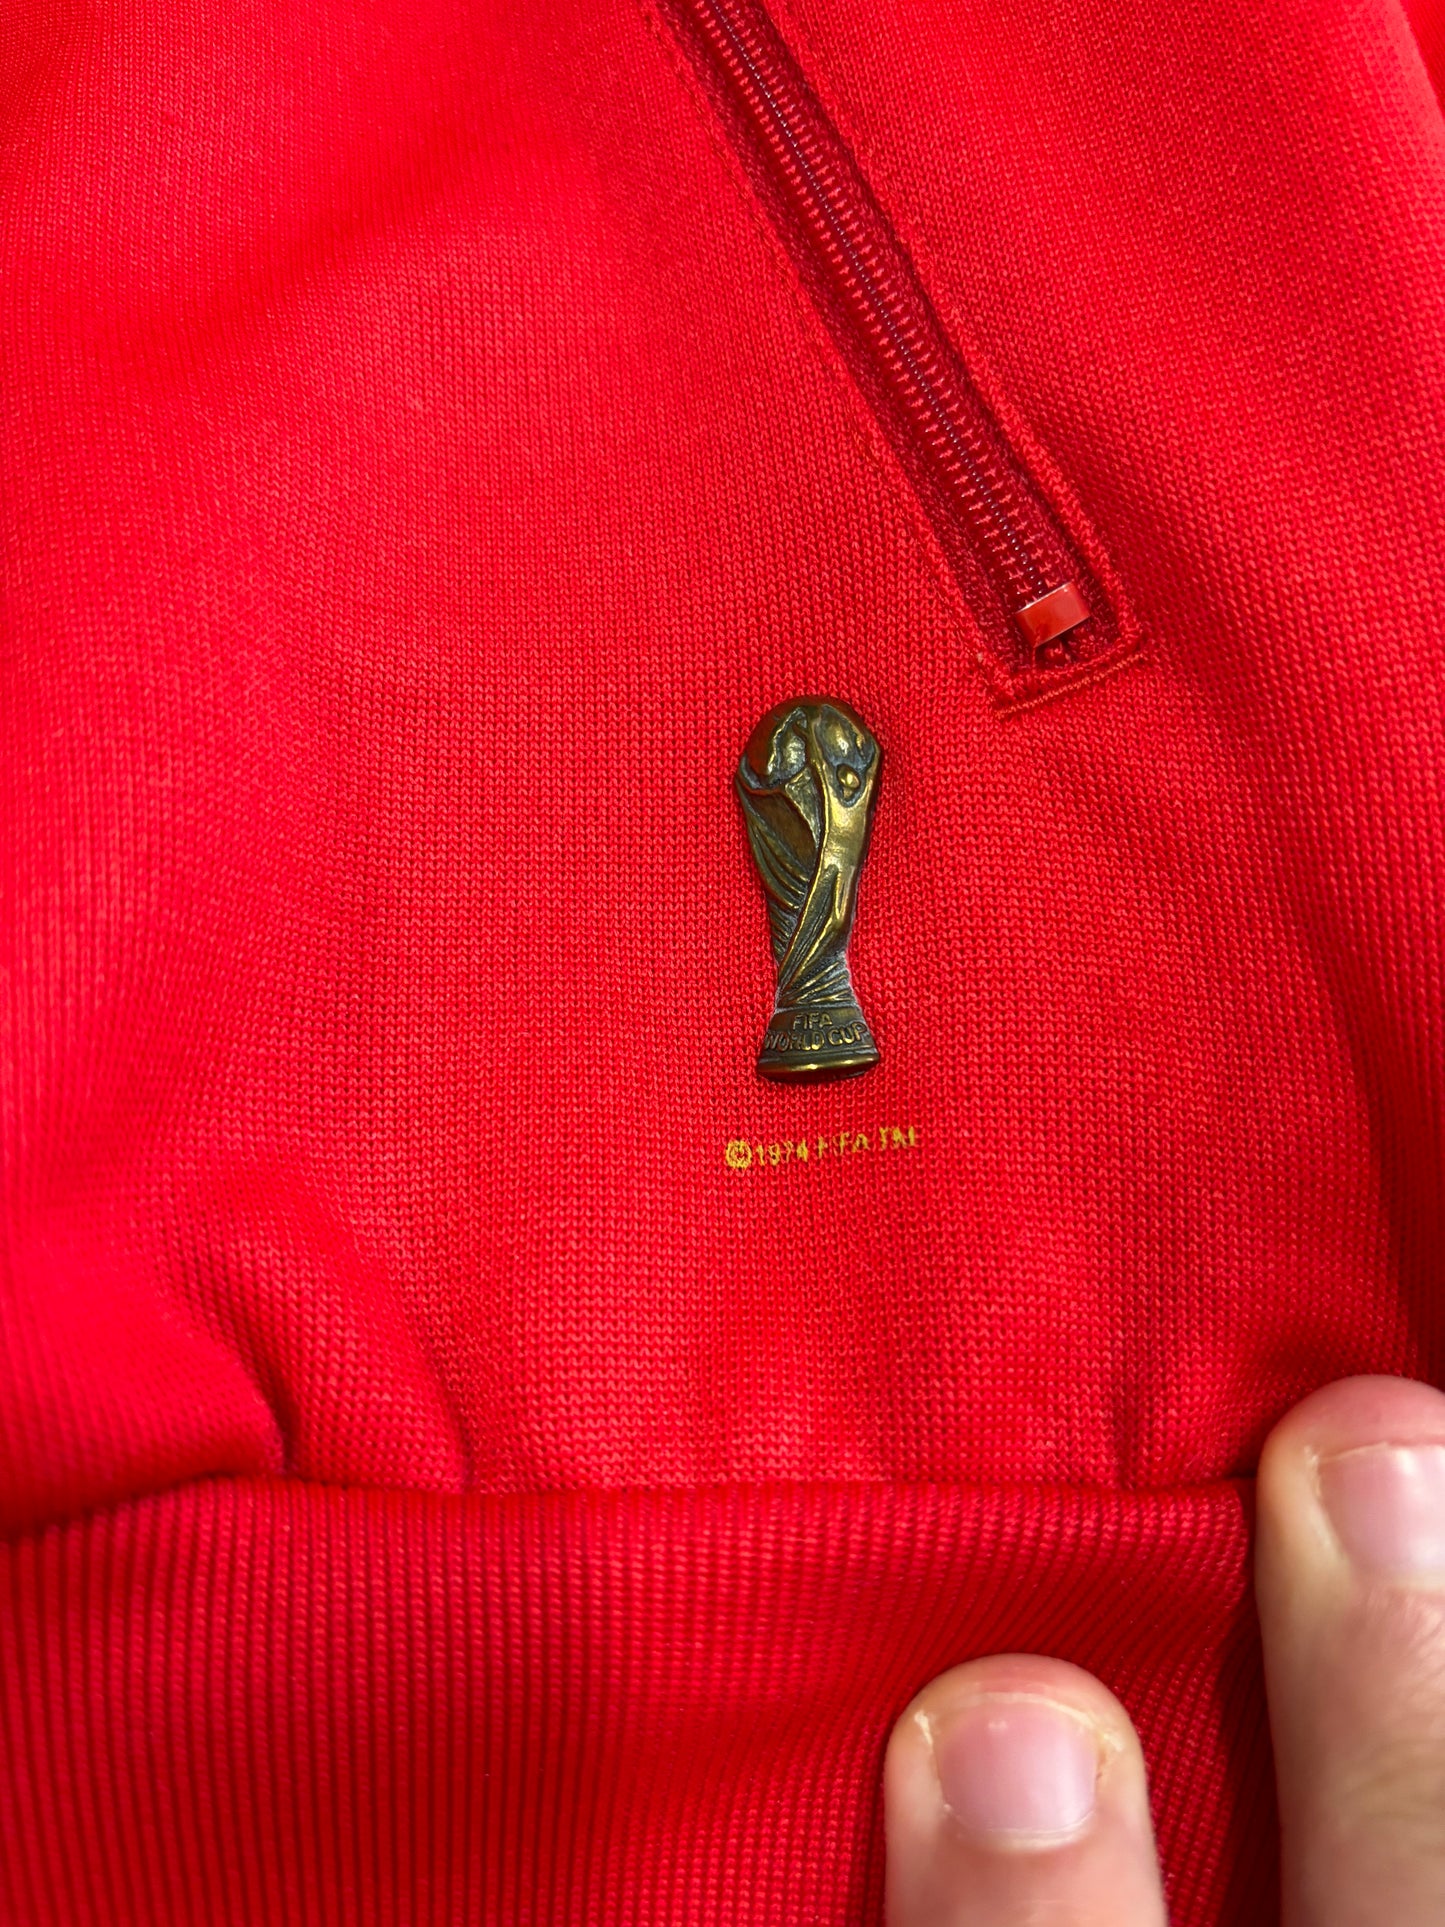 Adidas England World Cup 2006 Vintage Jacket - S